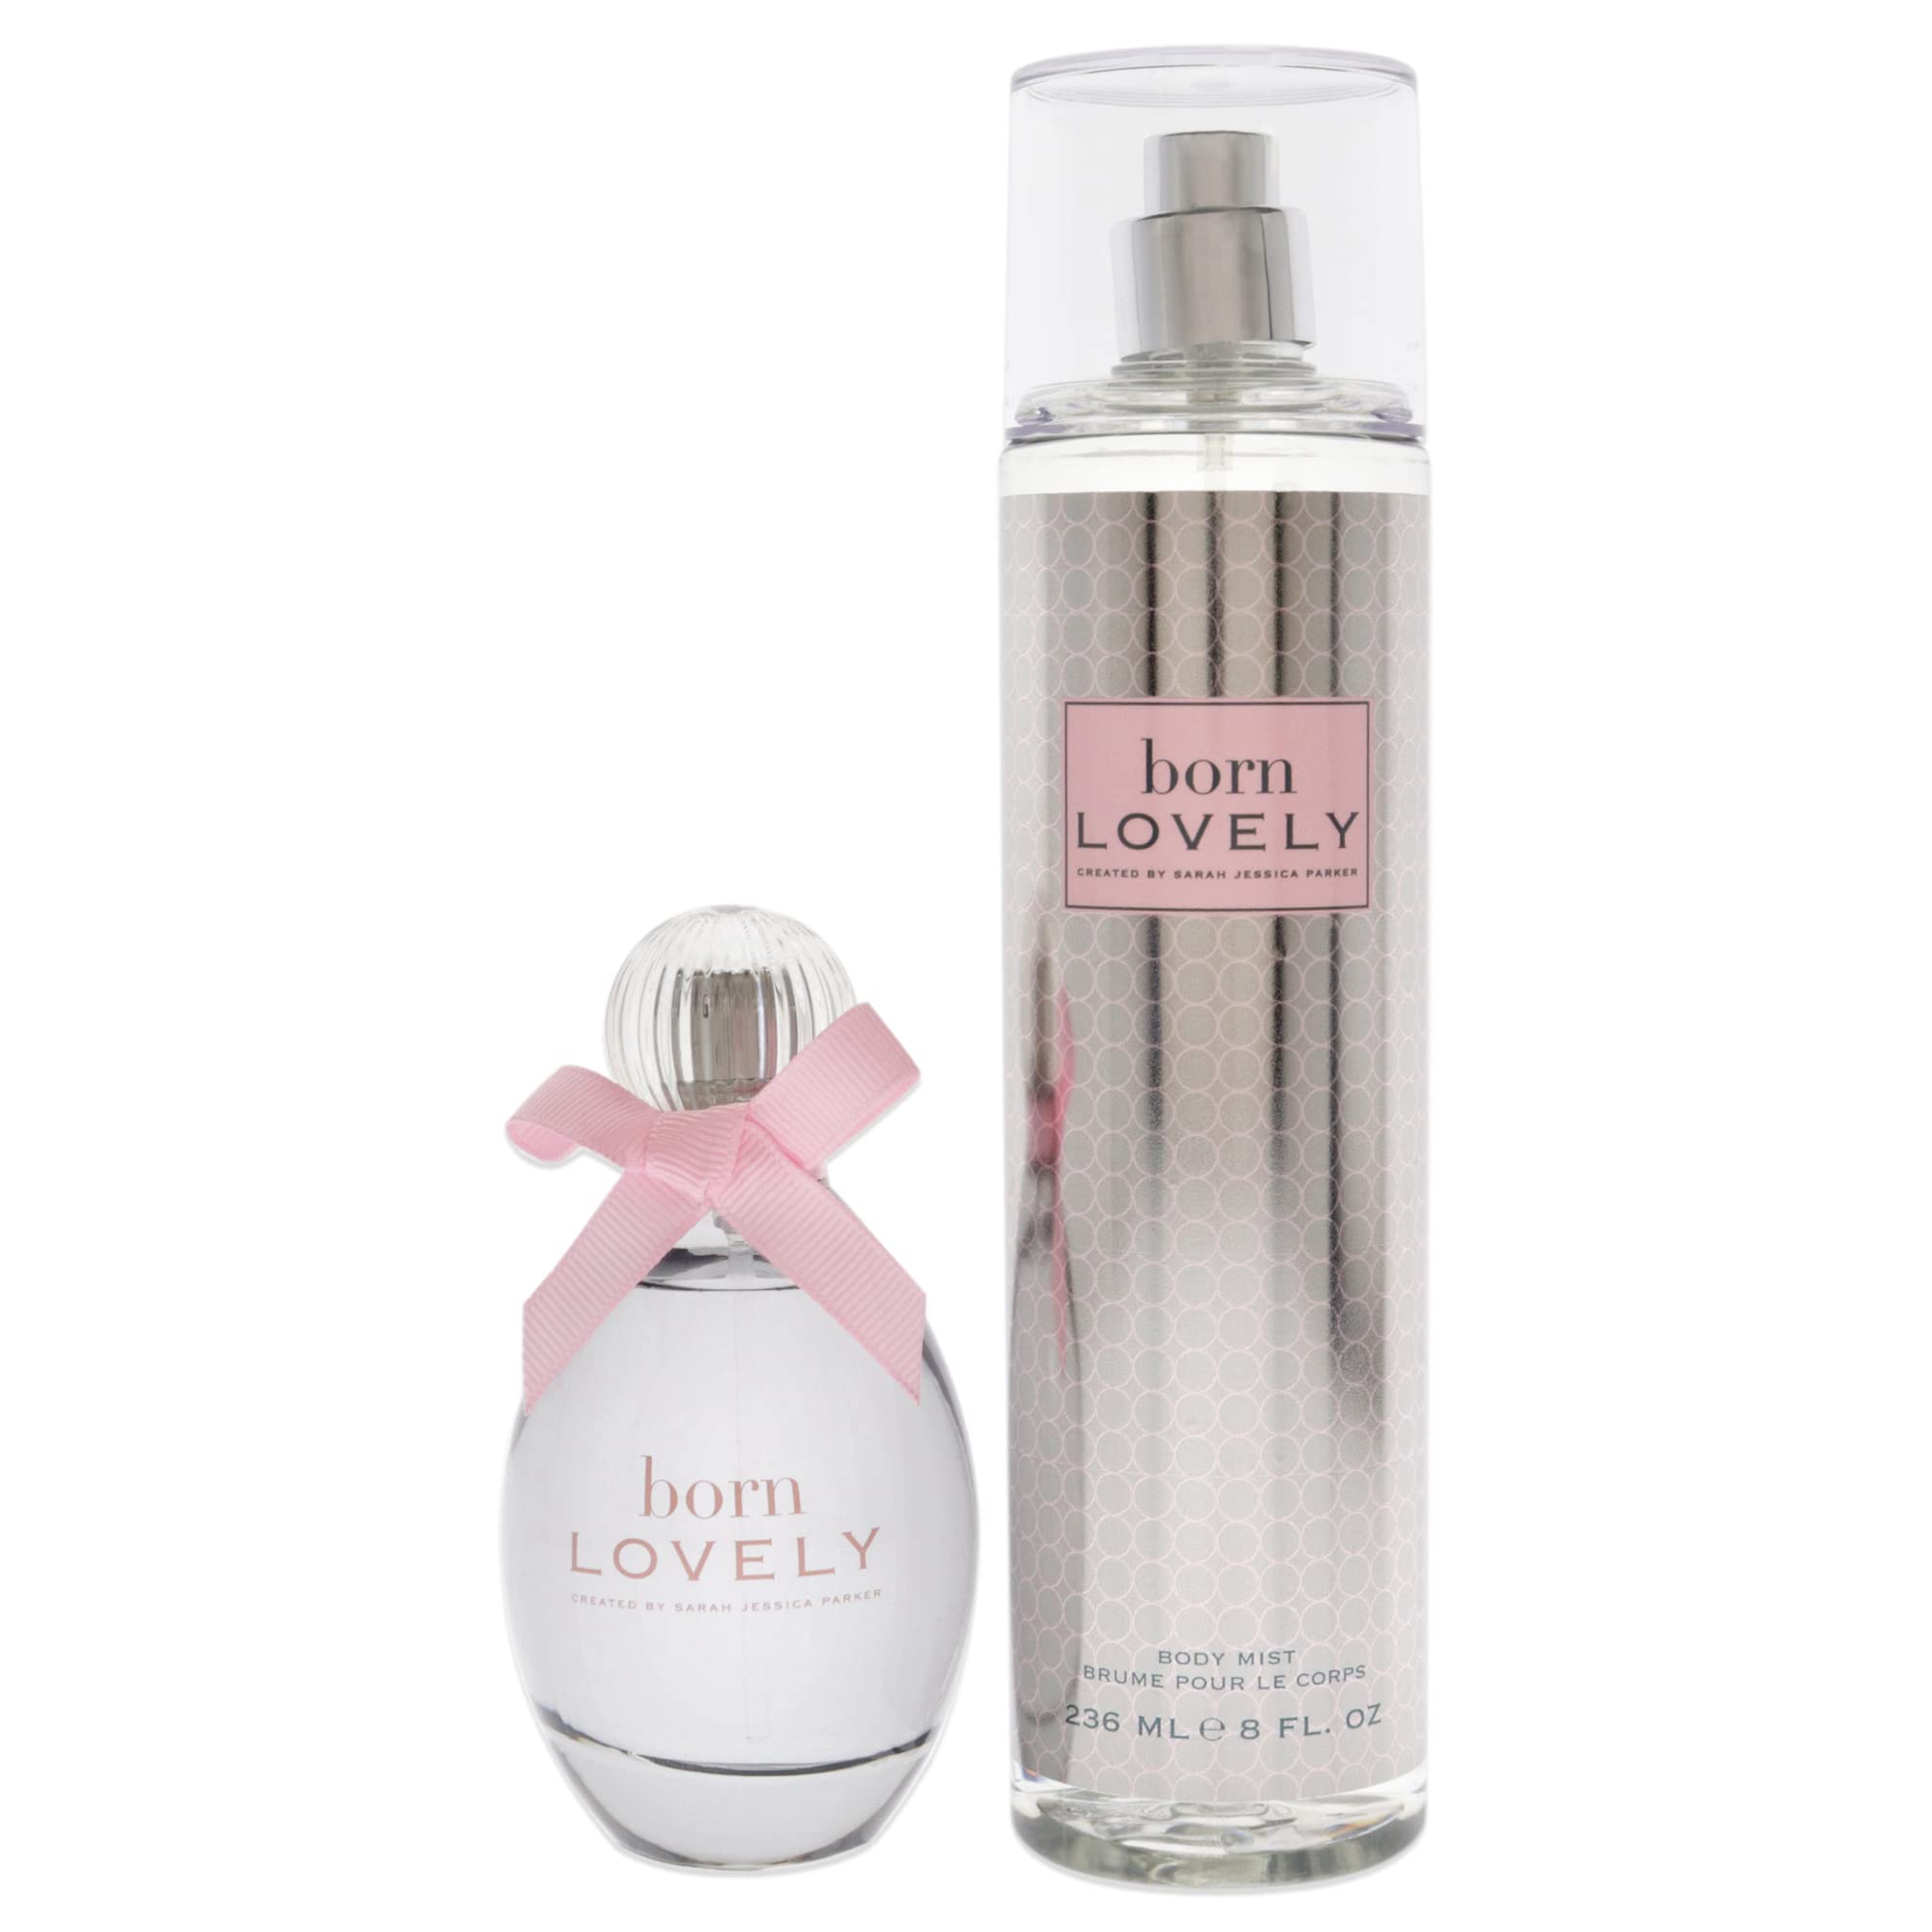 Born Lovely by Sarah Jessica Parker for Women - 2 Pc Gift Set 1.7oz EDP Spray, 8oz Body Mist